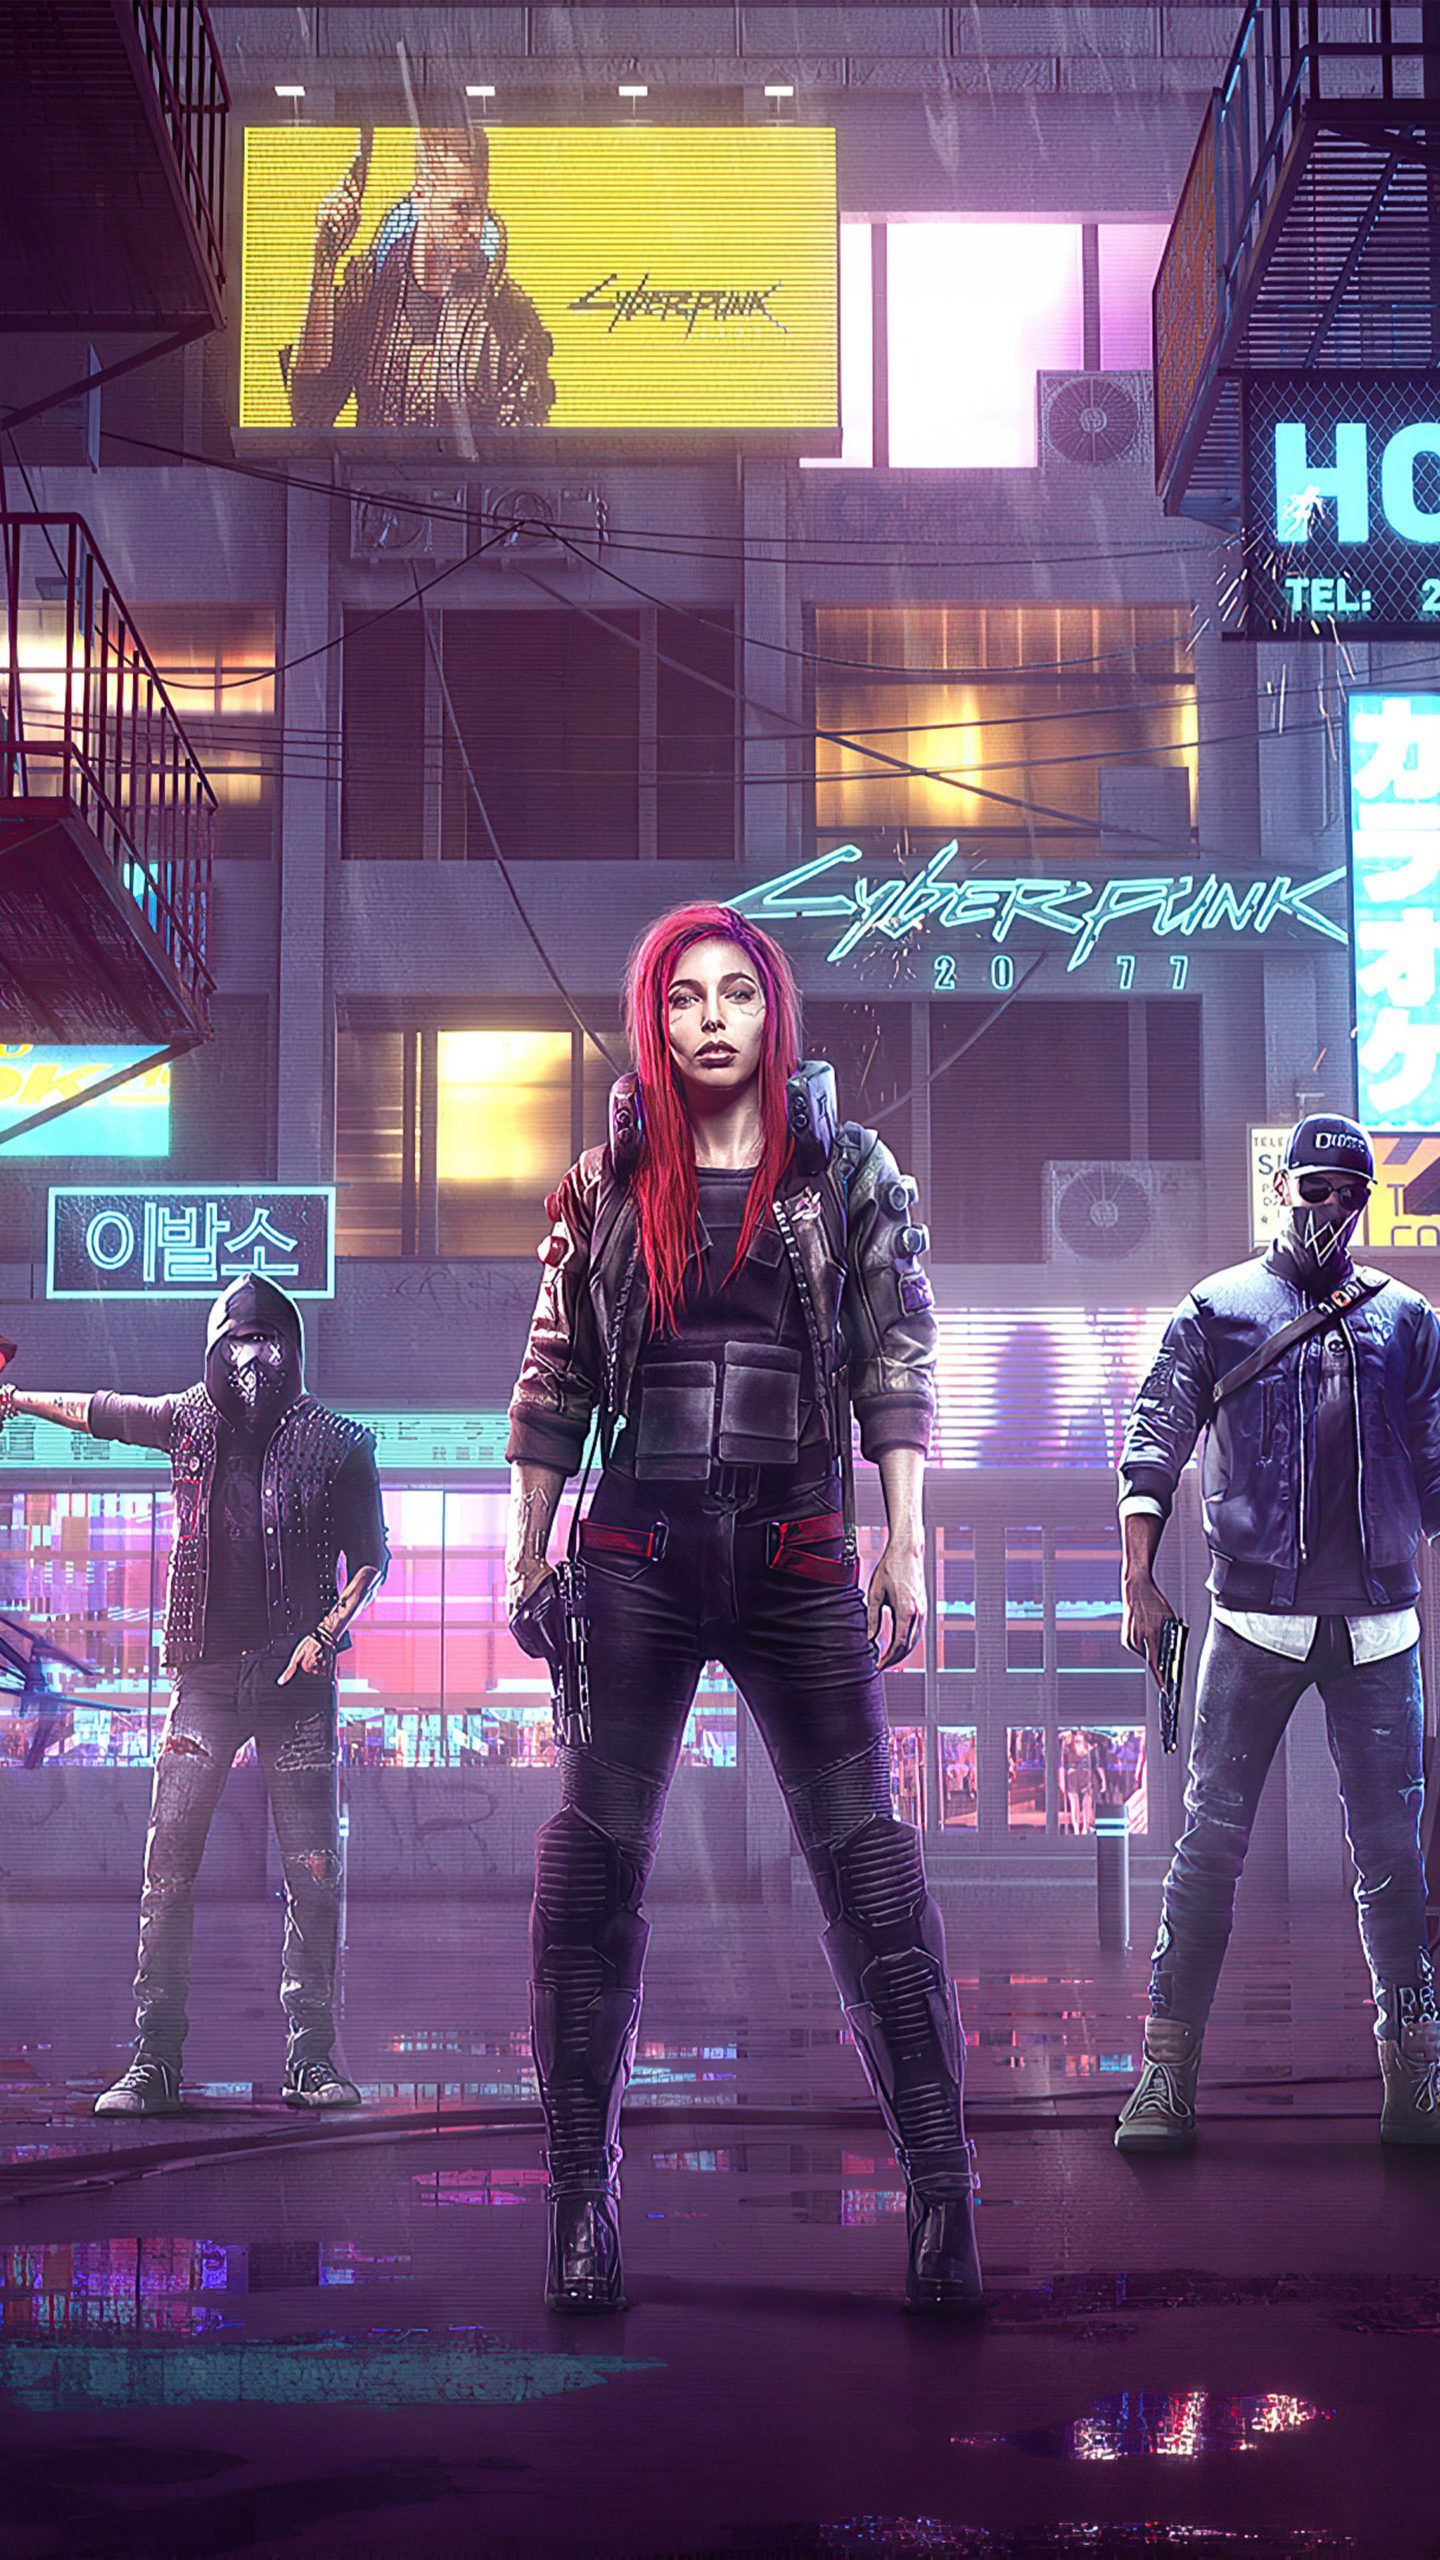 Cyberpunk 2077 New 2020 Game Poster 4K Ultra HD Mobile Wallpaper. Cyberpunk, Cyberpunk Cyberpunk aesthetic